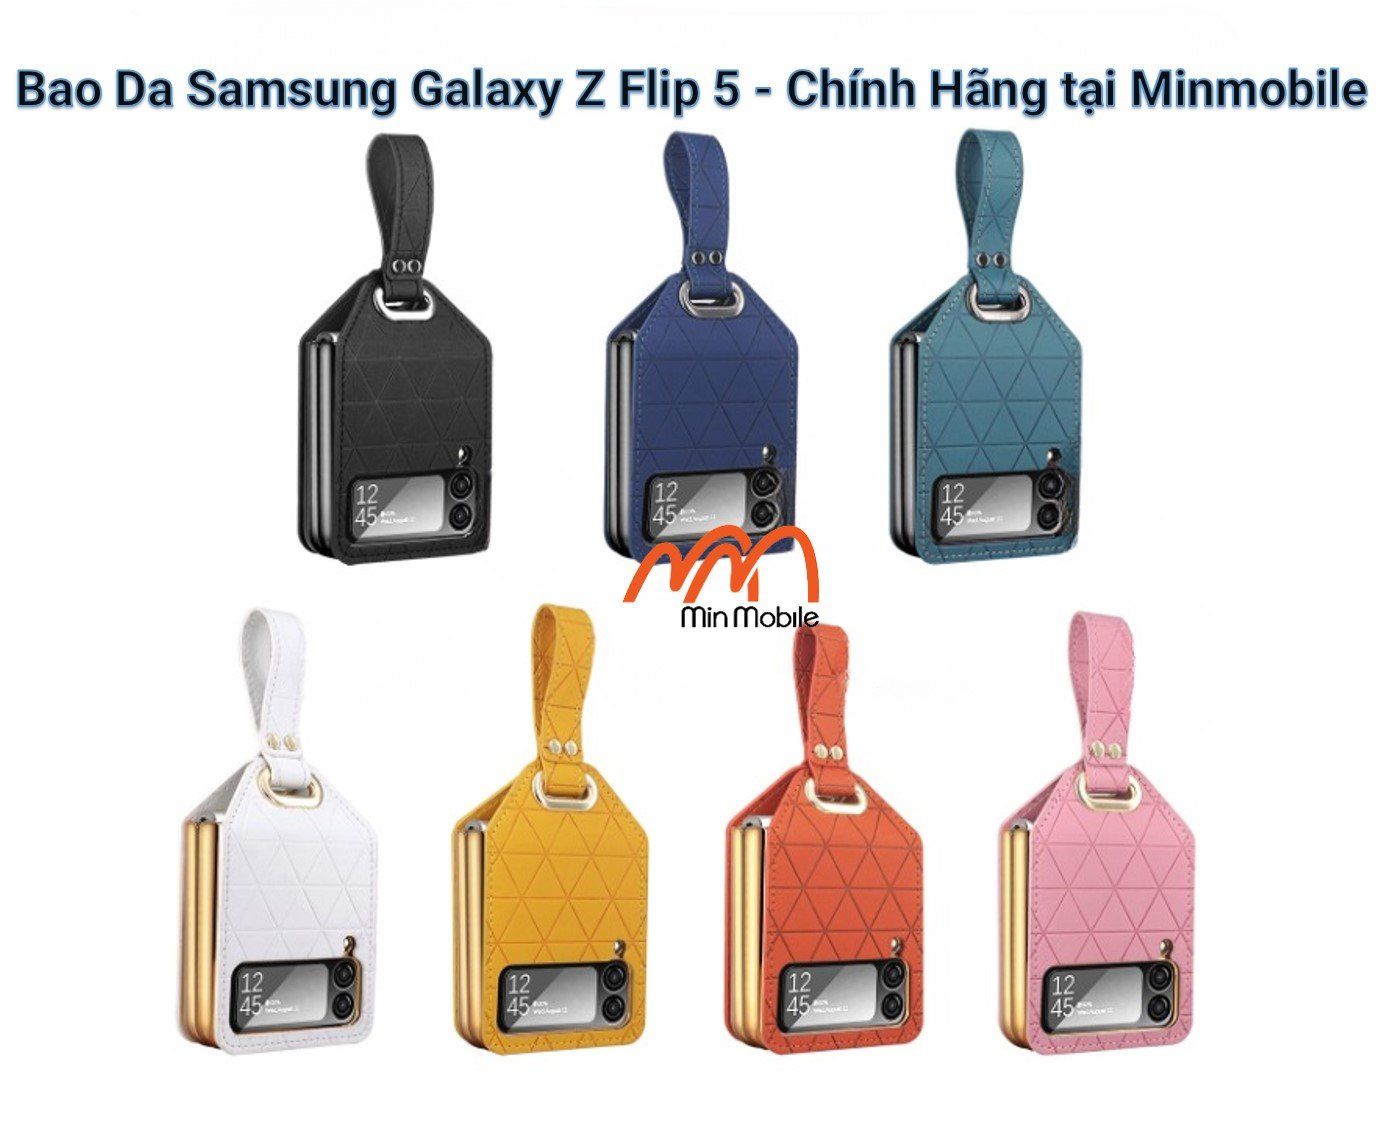 bao-da-samsung-galaxy-z-flip-5-chinh-hang-min-mobile-quan-phu-nhuan-tphcm